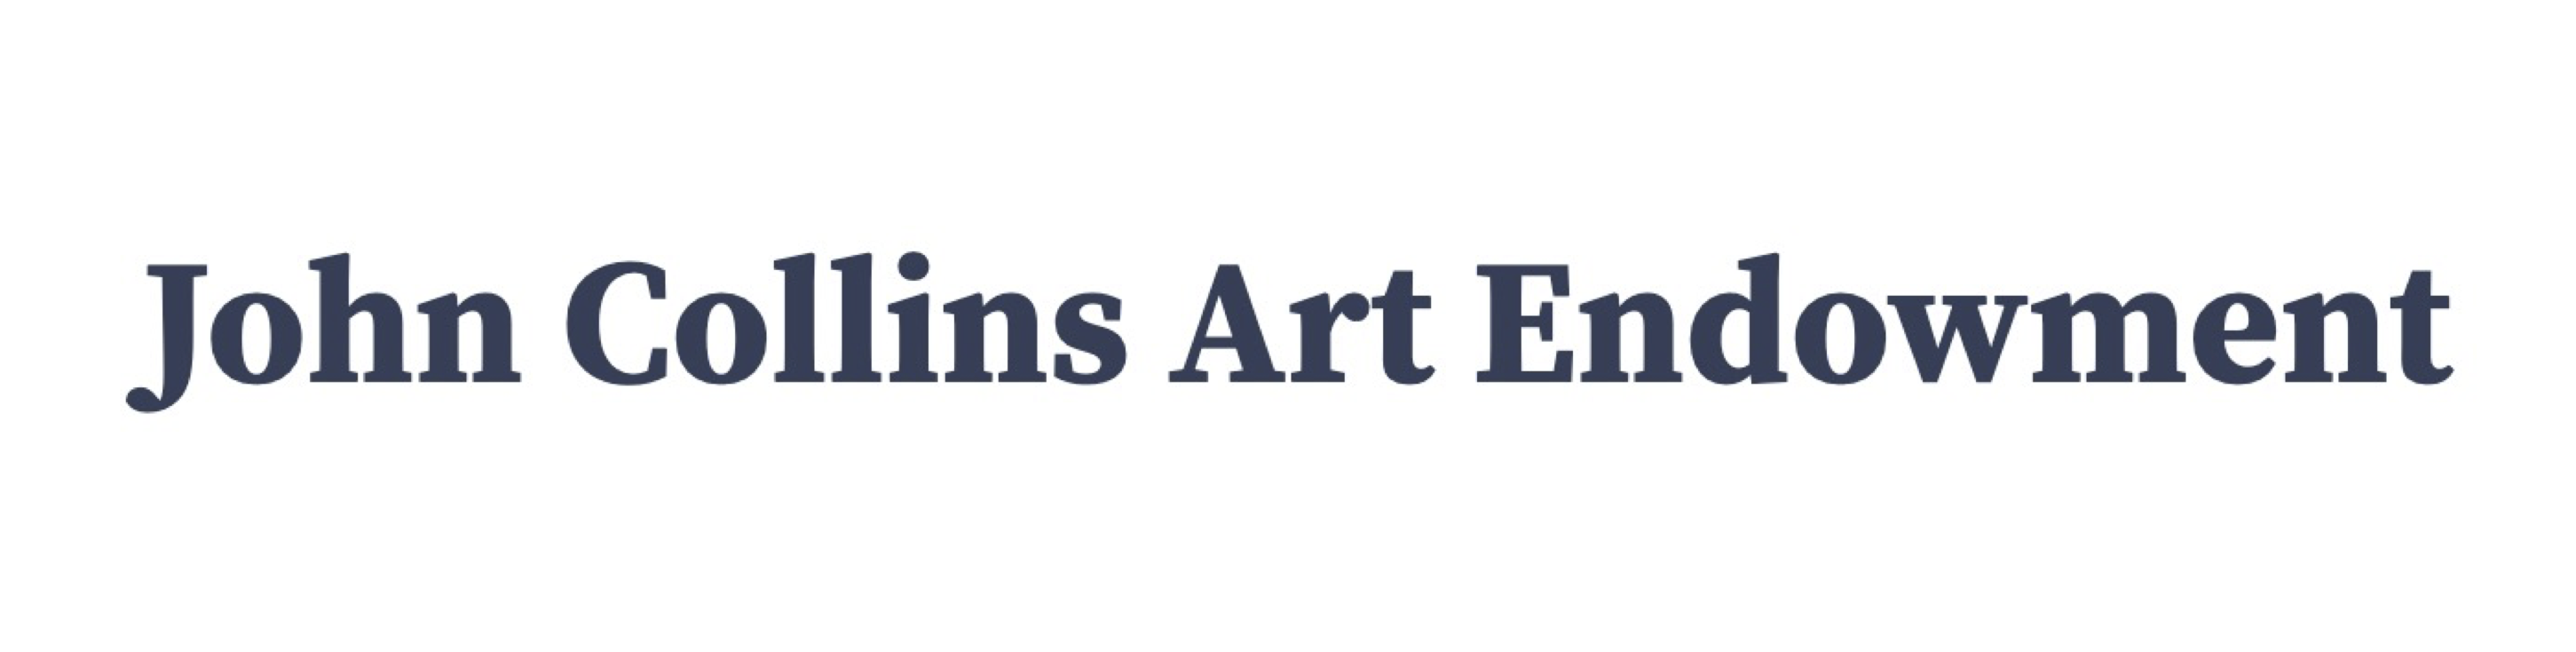 John Collins Art Endowment